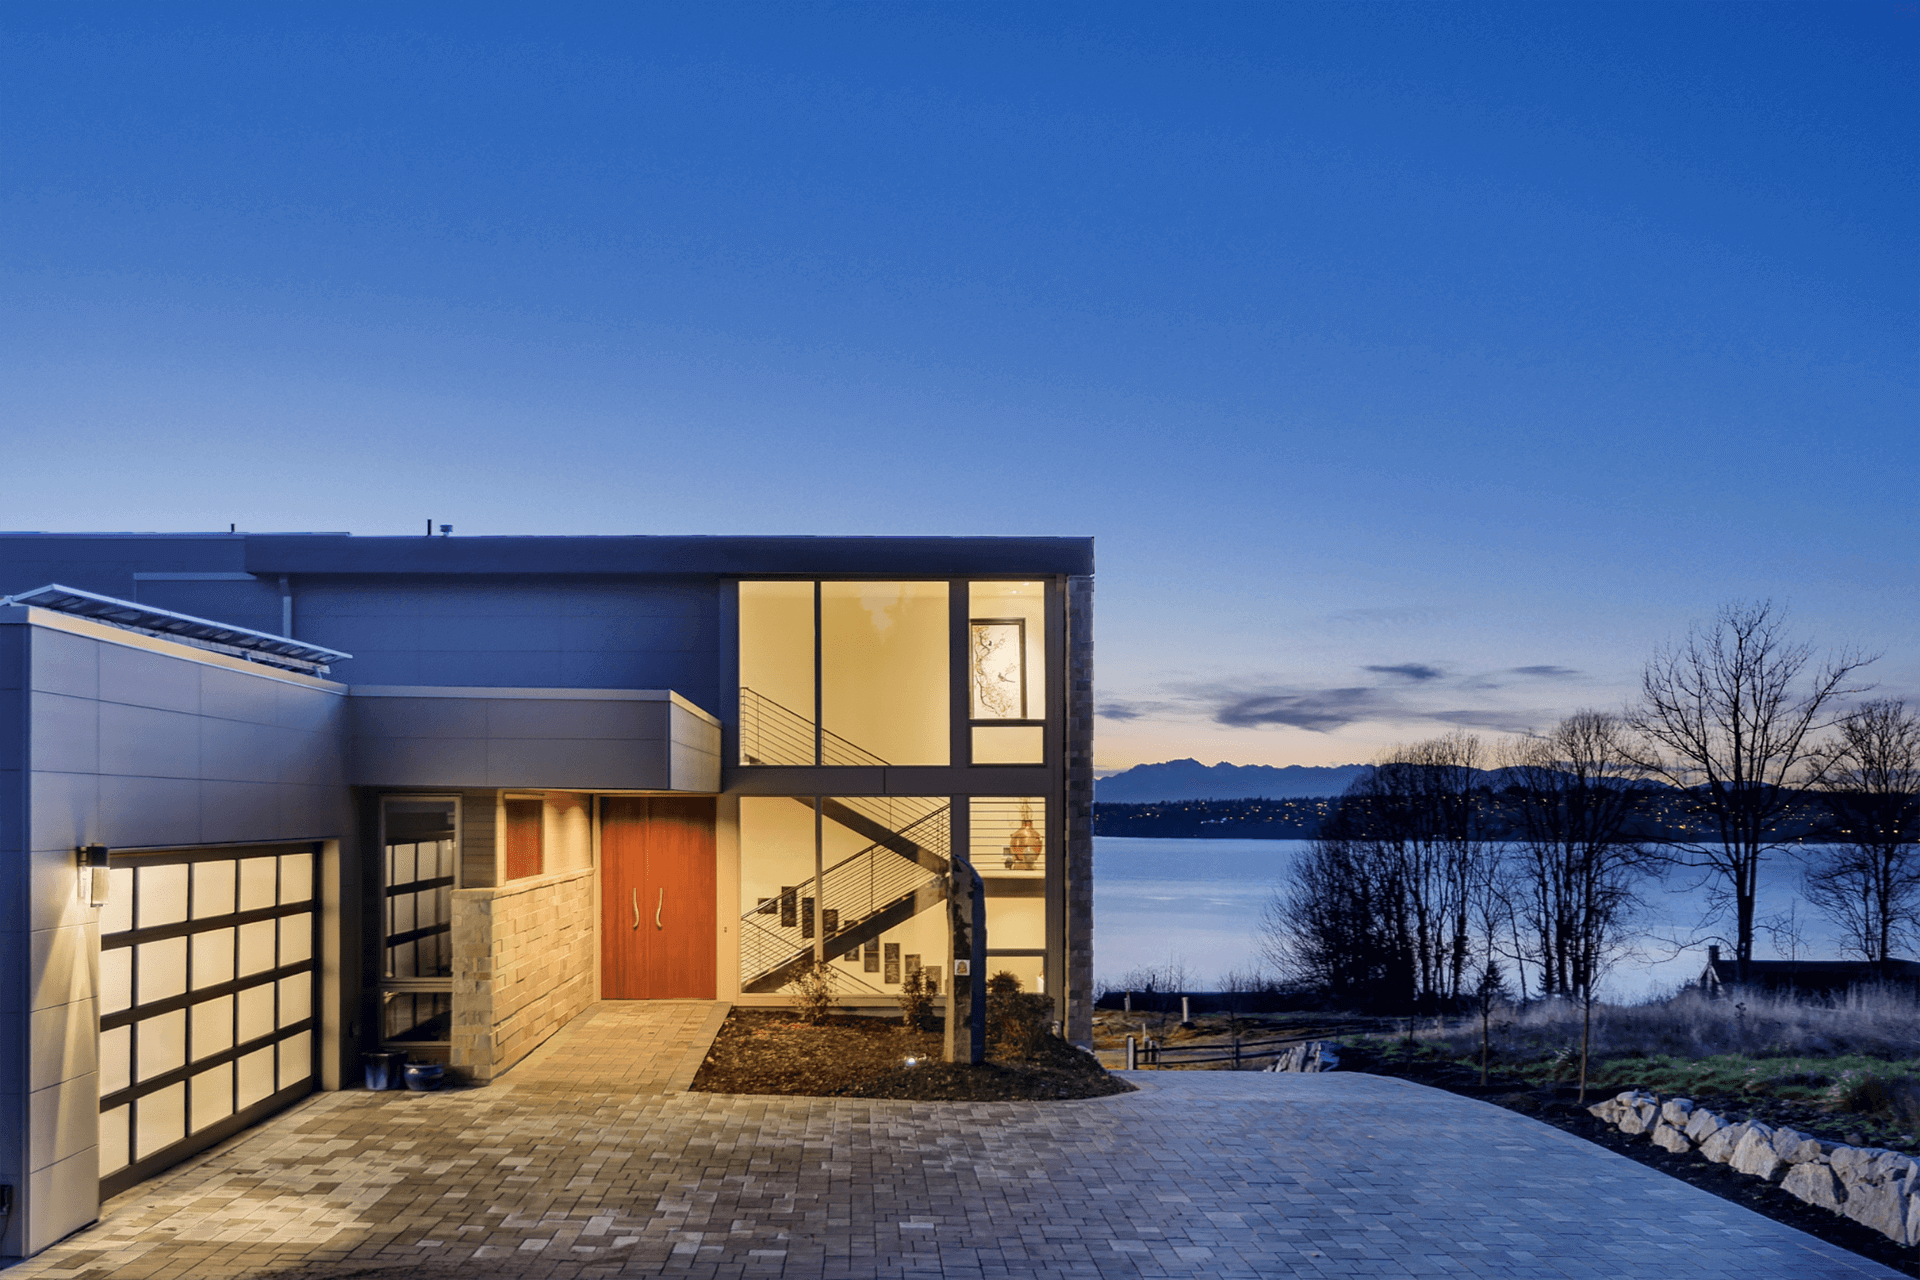 Stunning modern house at dusk with fiber cement siding